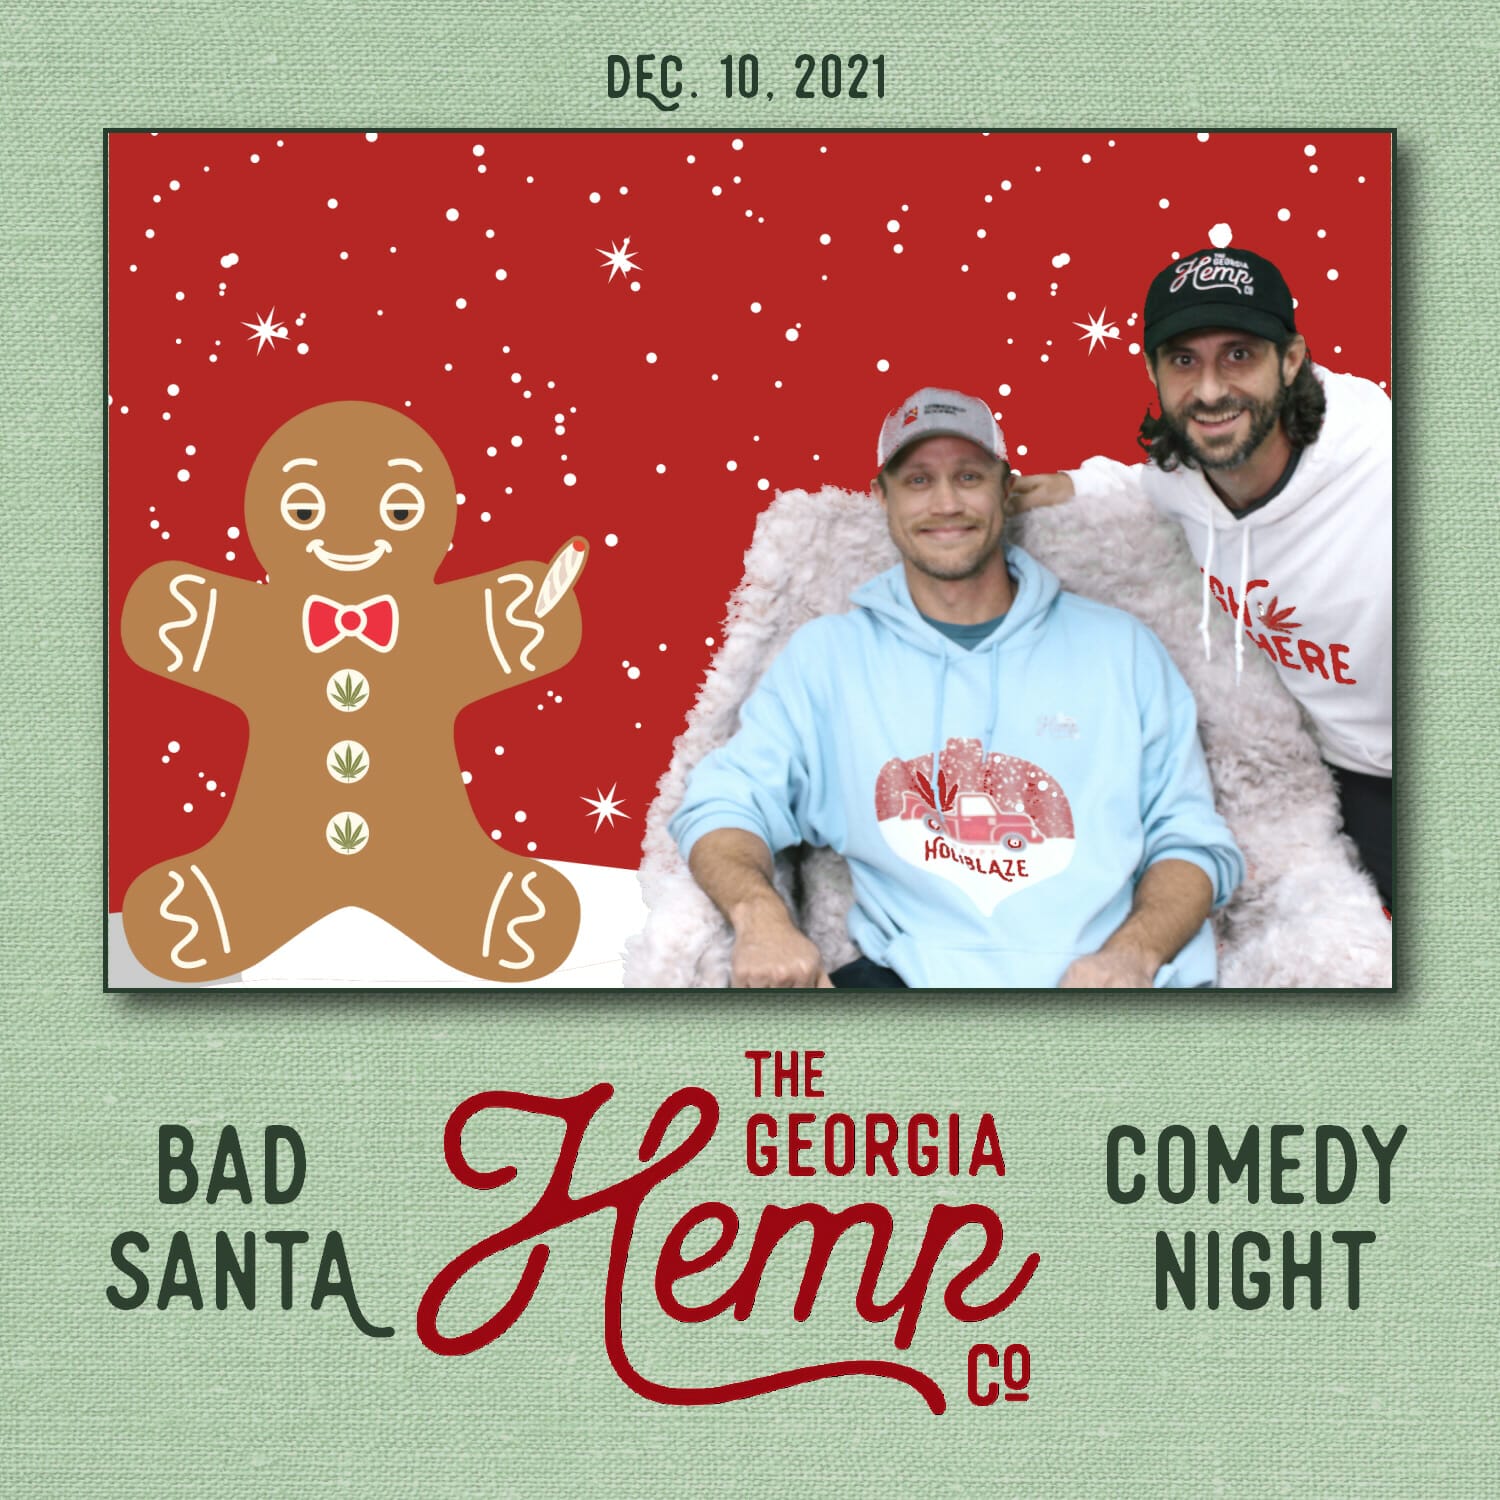 Our bad santa comedy night was a blast!